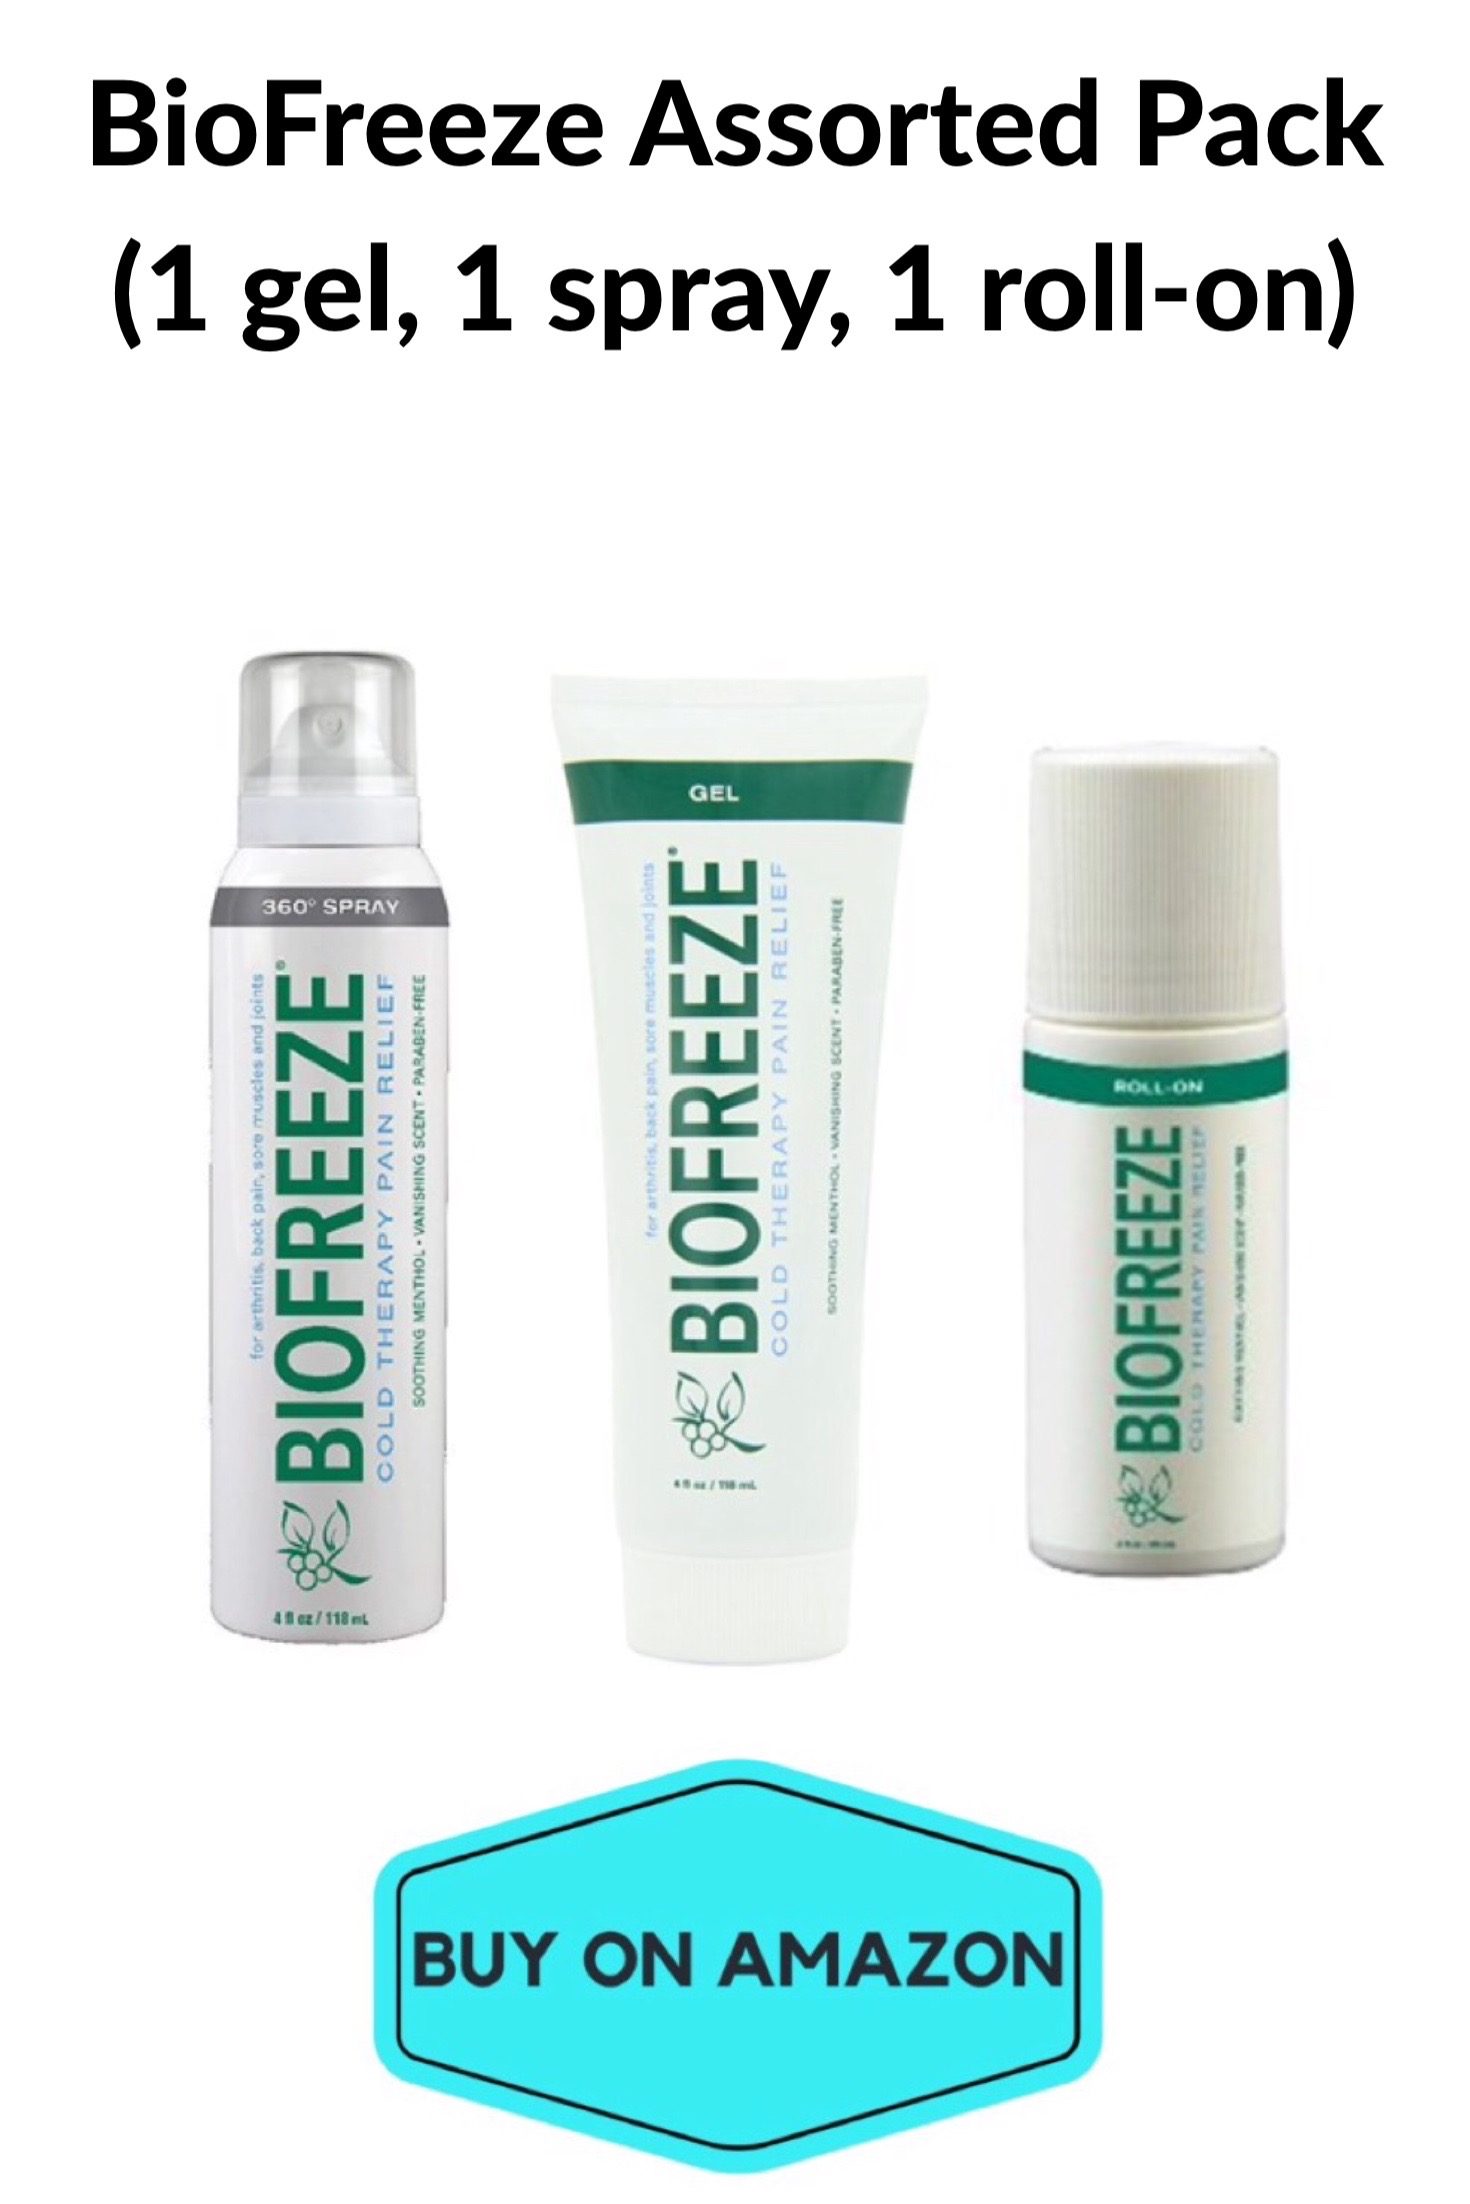 BioFreeze Assorted Pack